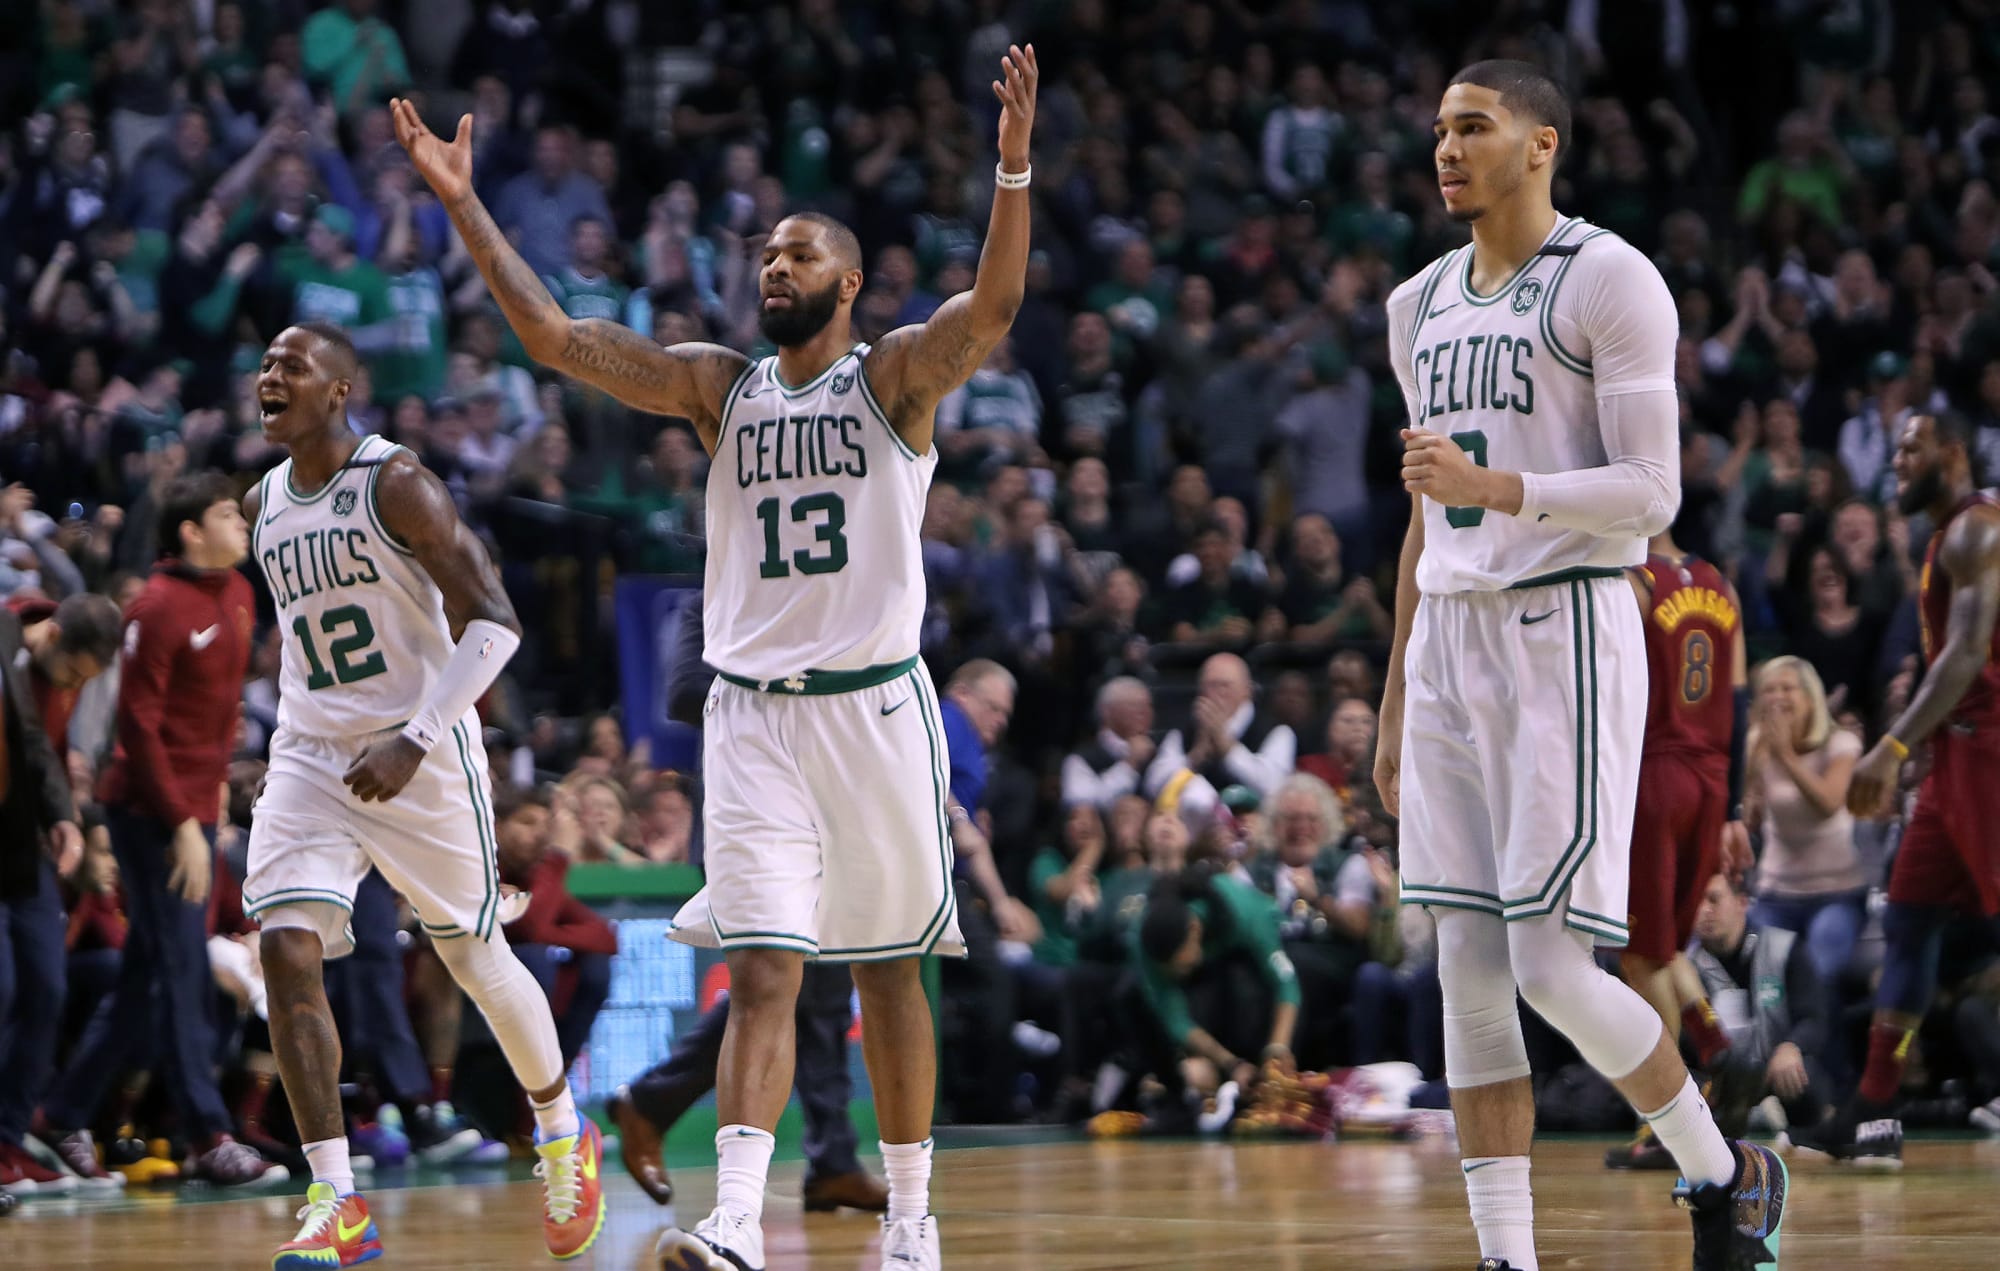 Boston Celtics 3 takeaways from Game 1 vs. Cavaliers